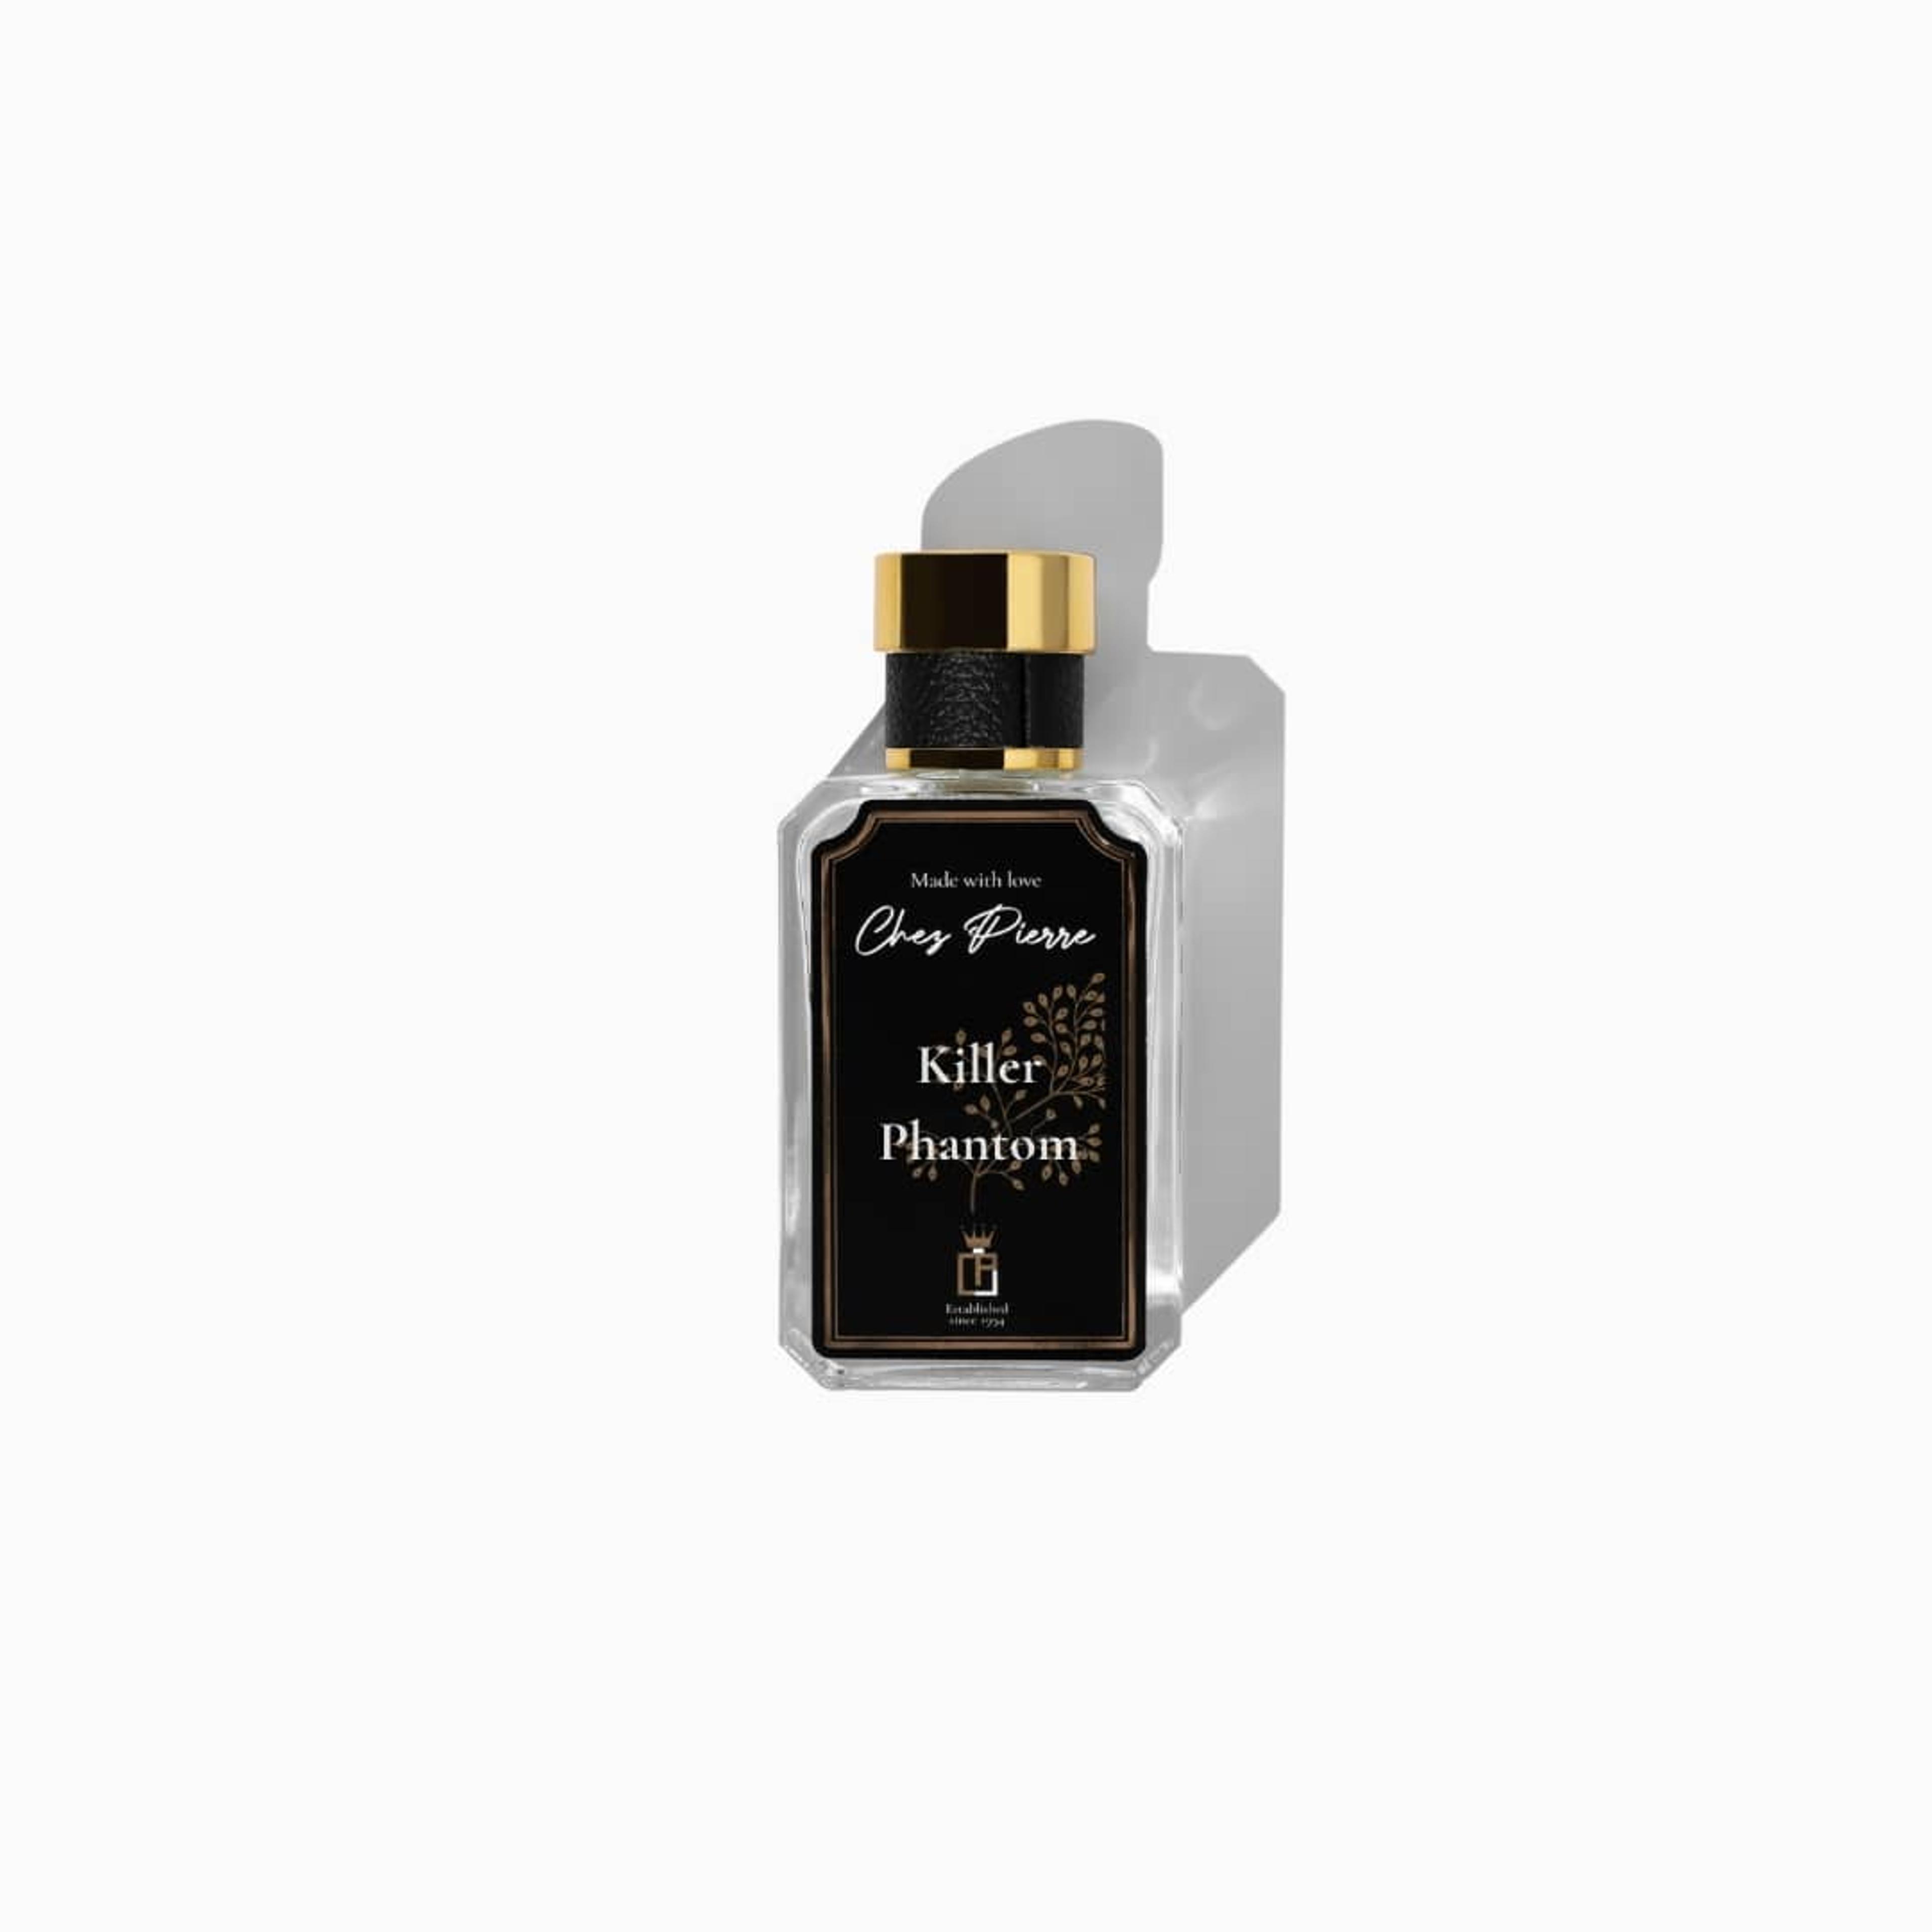 Chez Pierre's Killer Phantom Perfume Inspired By Black Phantom